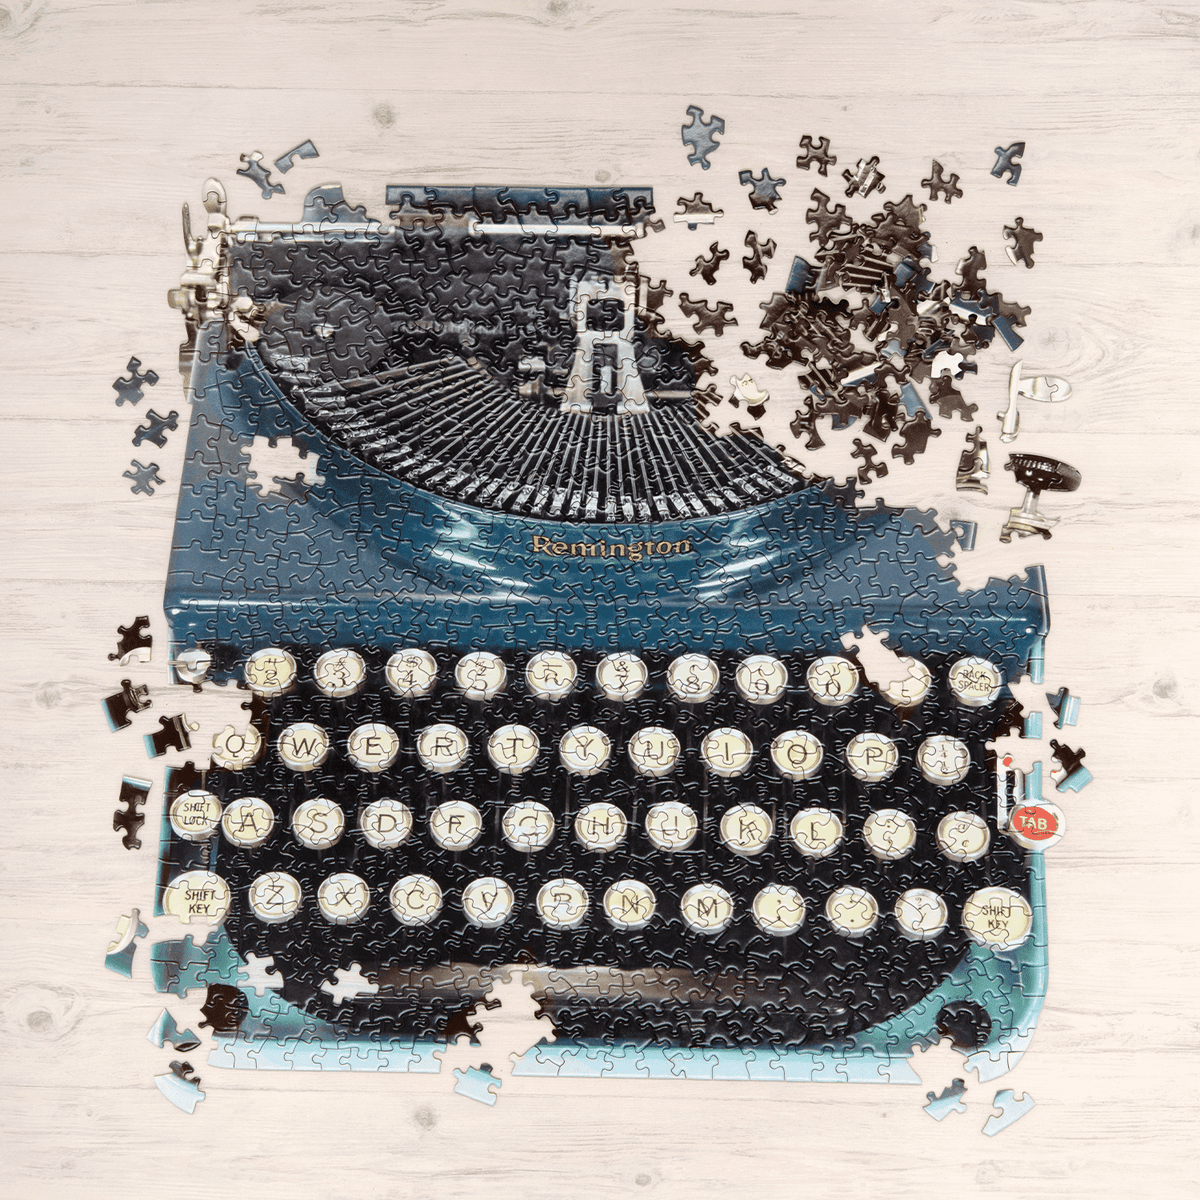 Vintage Typewriter 750 Piece Shaped Puzzle 750 Piece Puzzles Galison 